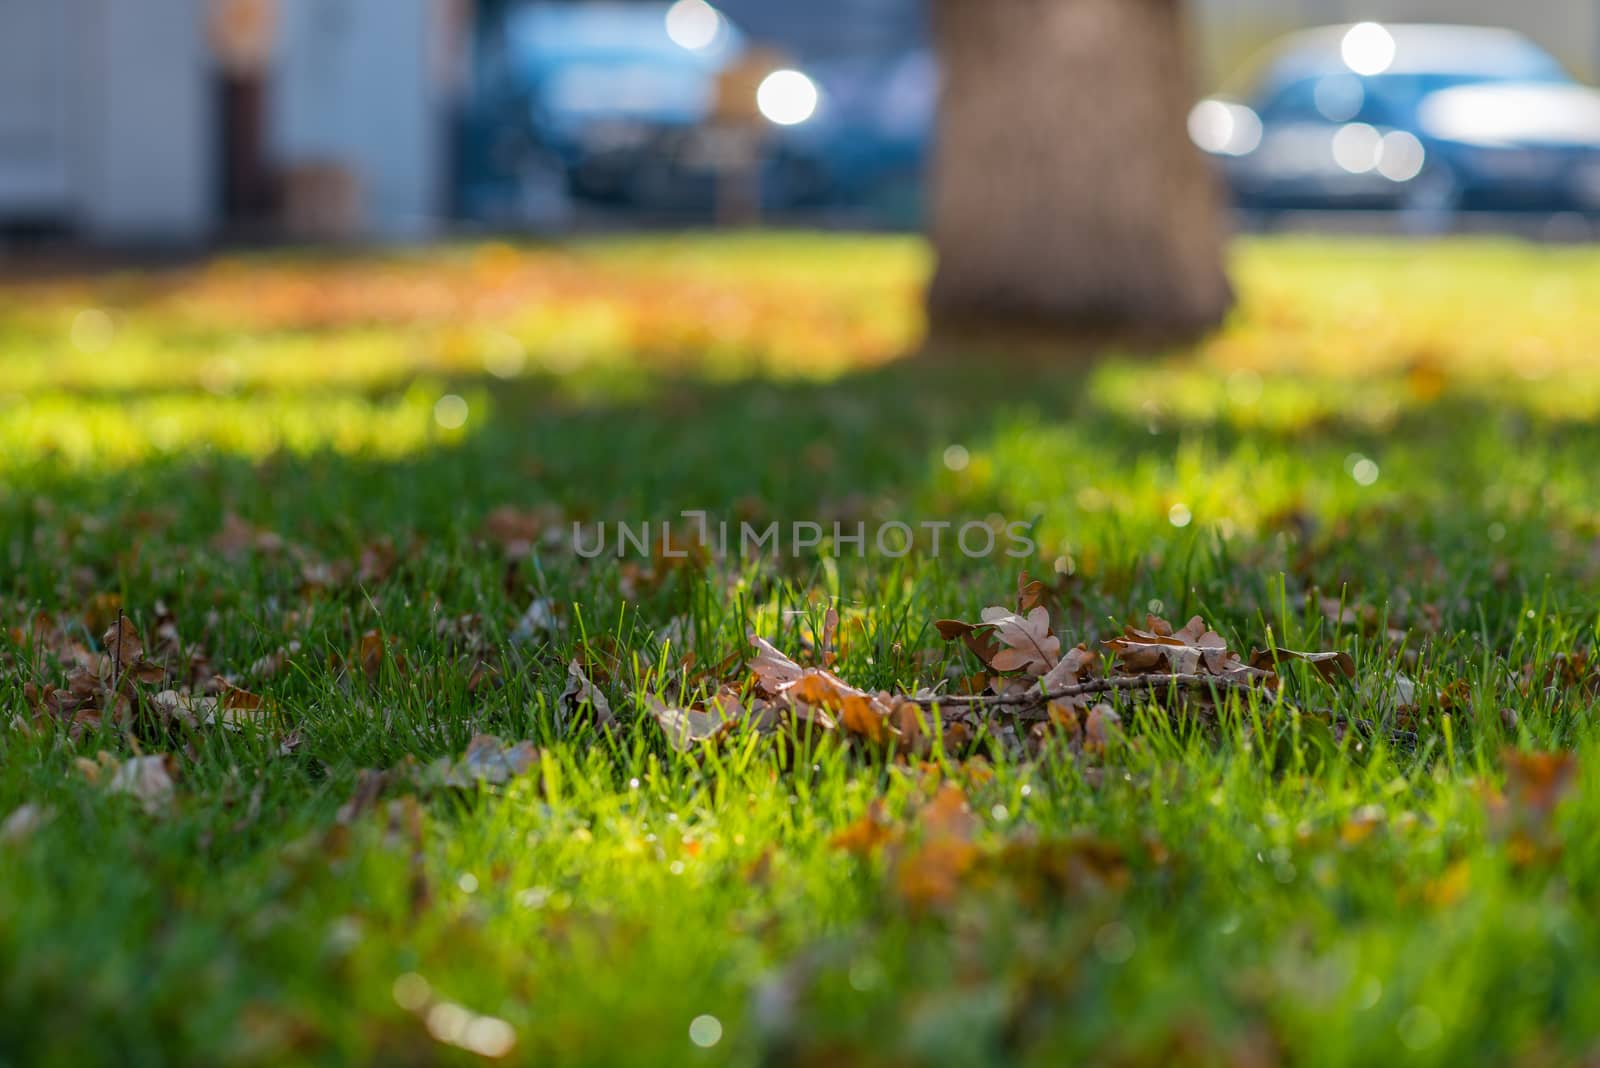 Dry oak branch lying on green grass under oak tree. Shallow depth of filed. Warm autumn.